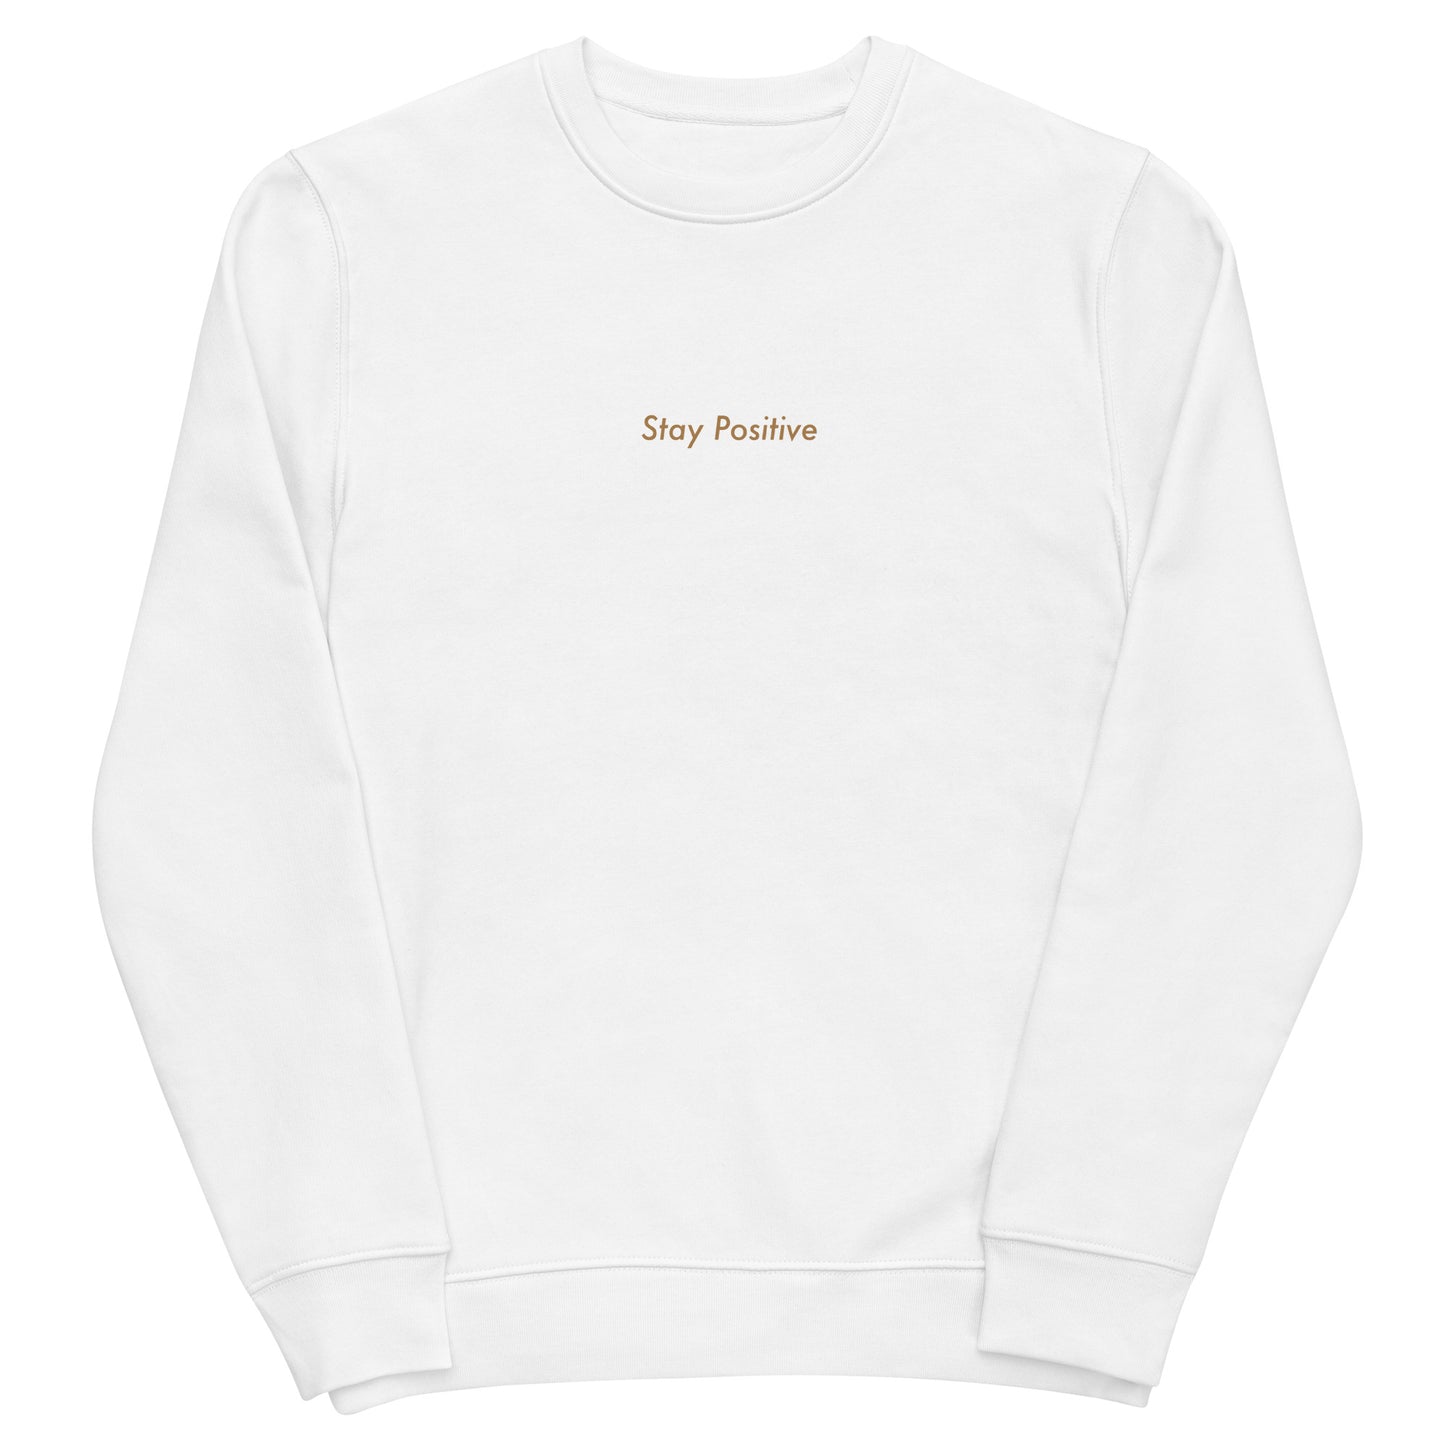 Stay Positive Men's Organic Cotton Sweatshirt